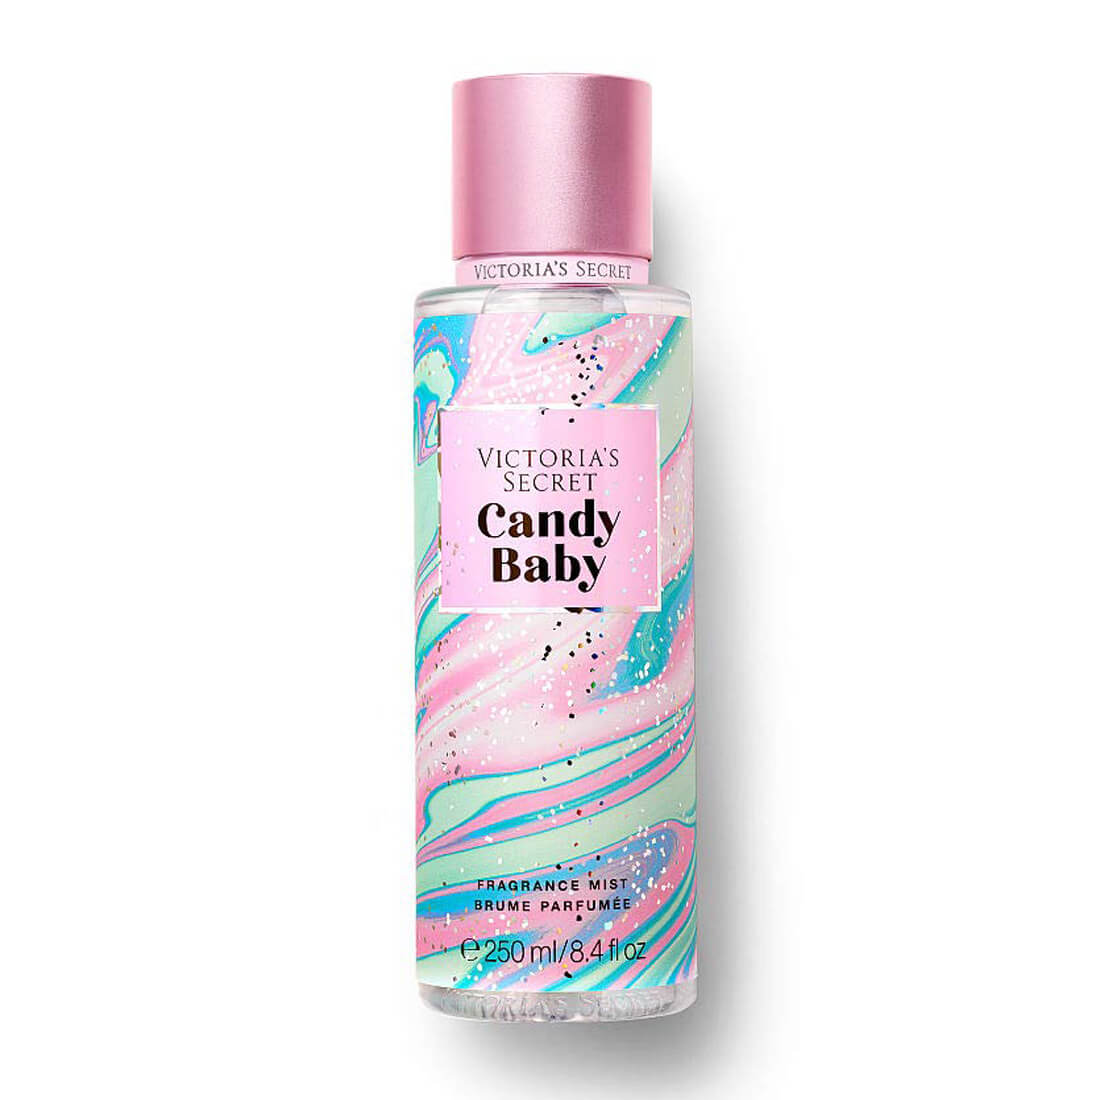 Victoria's Secret Candy Baby Fragrance Mist 250ml